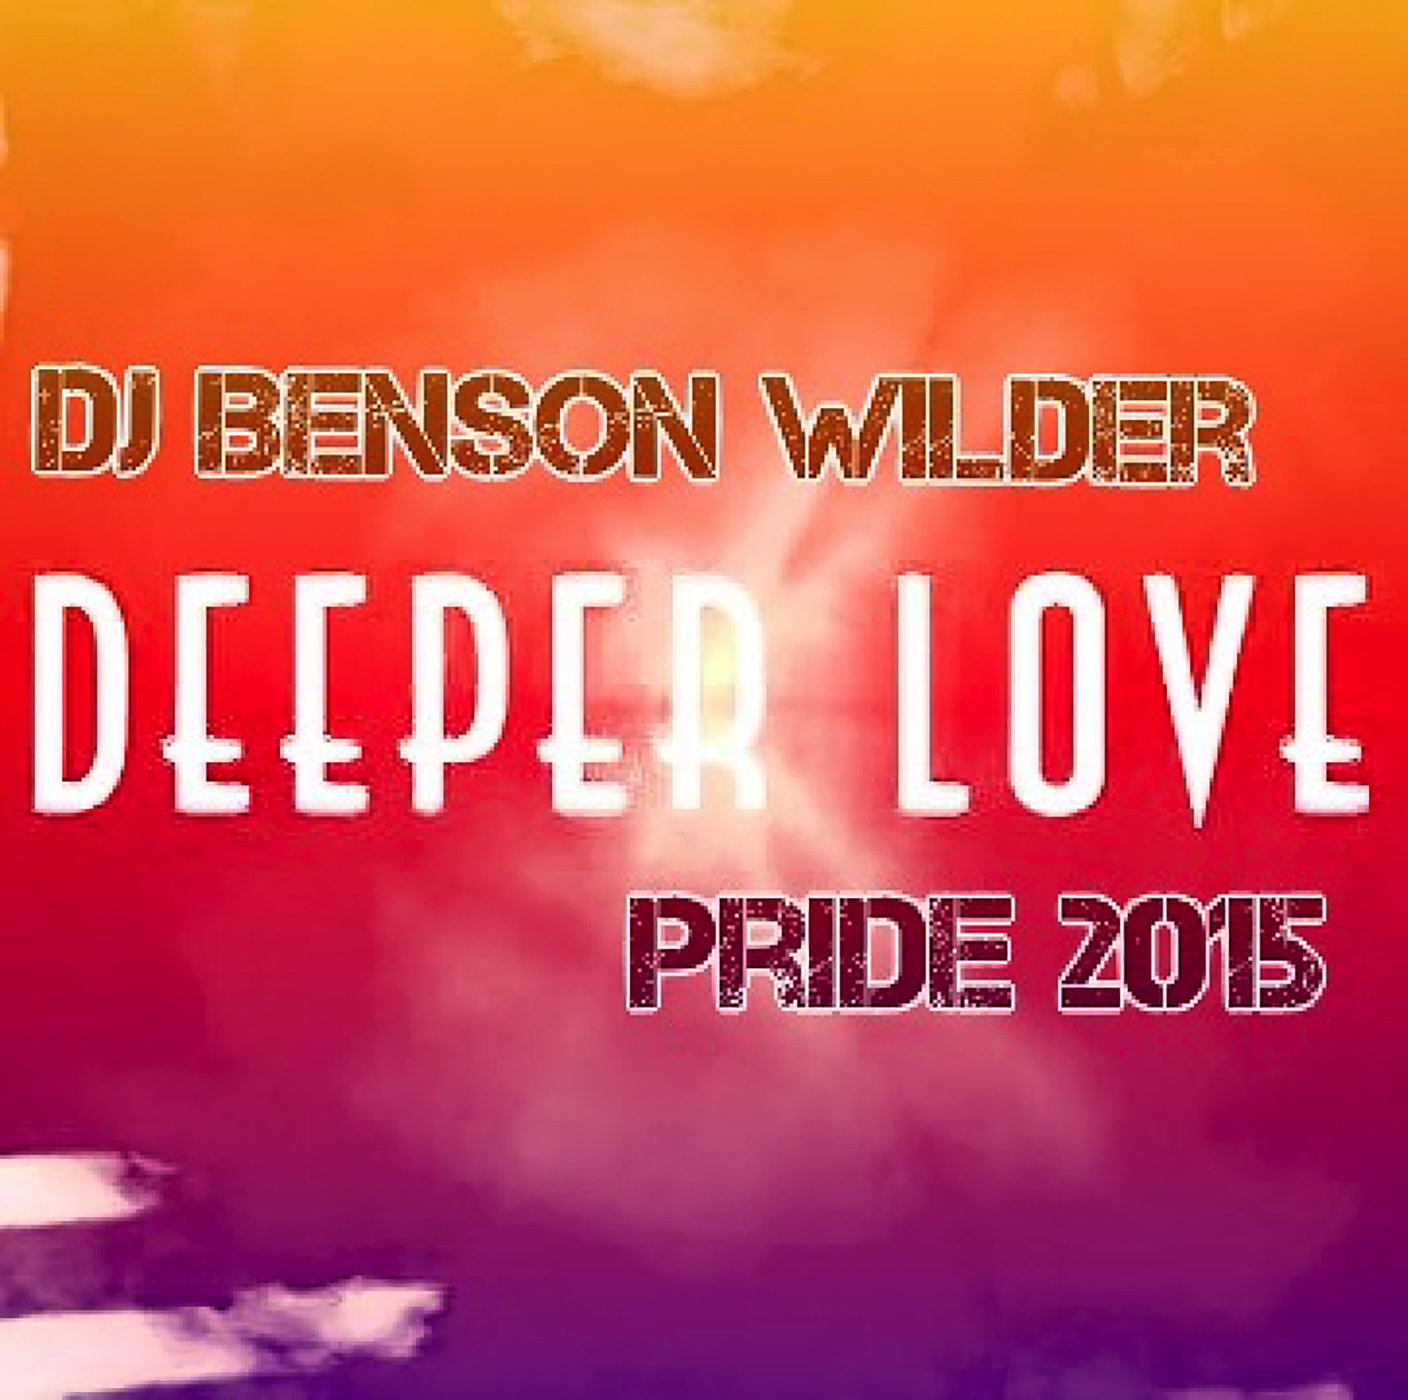 A Deeper Love: Pride 2015